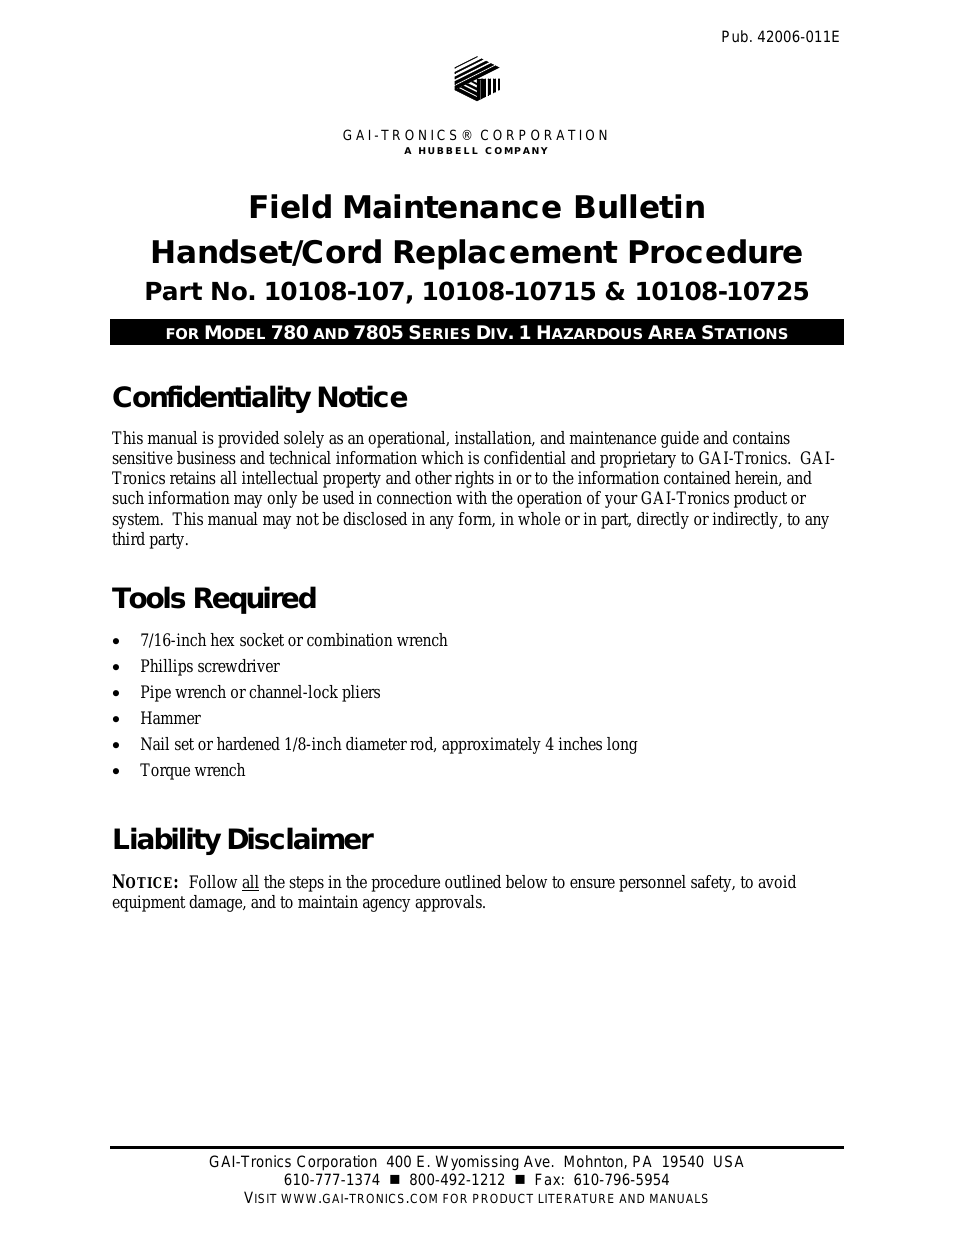 10108-009 Field Maintenance Bulletin: Handset/Cord Replacement Procedure for Model 780 & 7805 Series Div. 1 Hazardous Area Stations